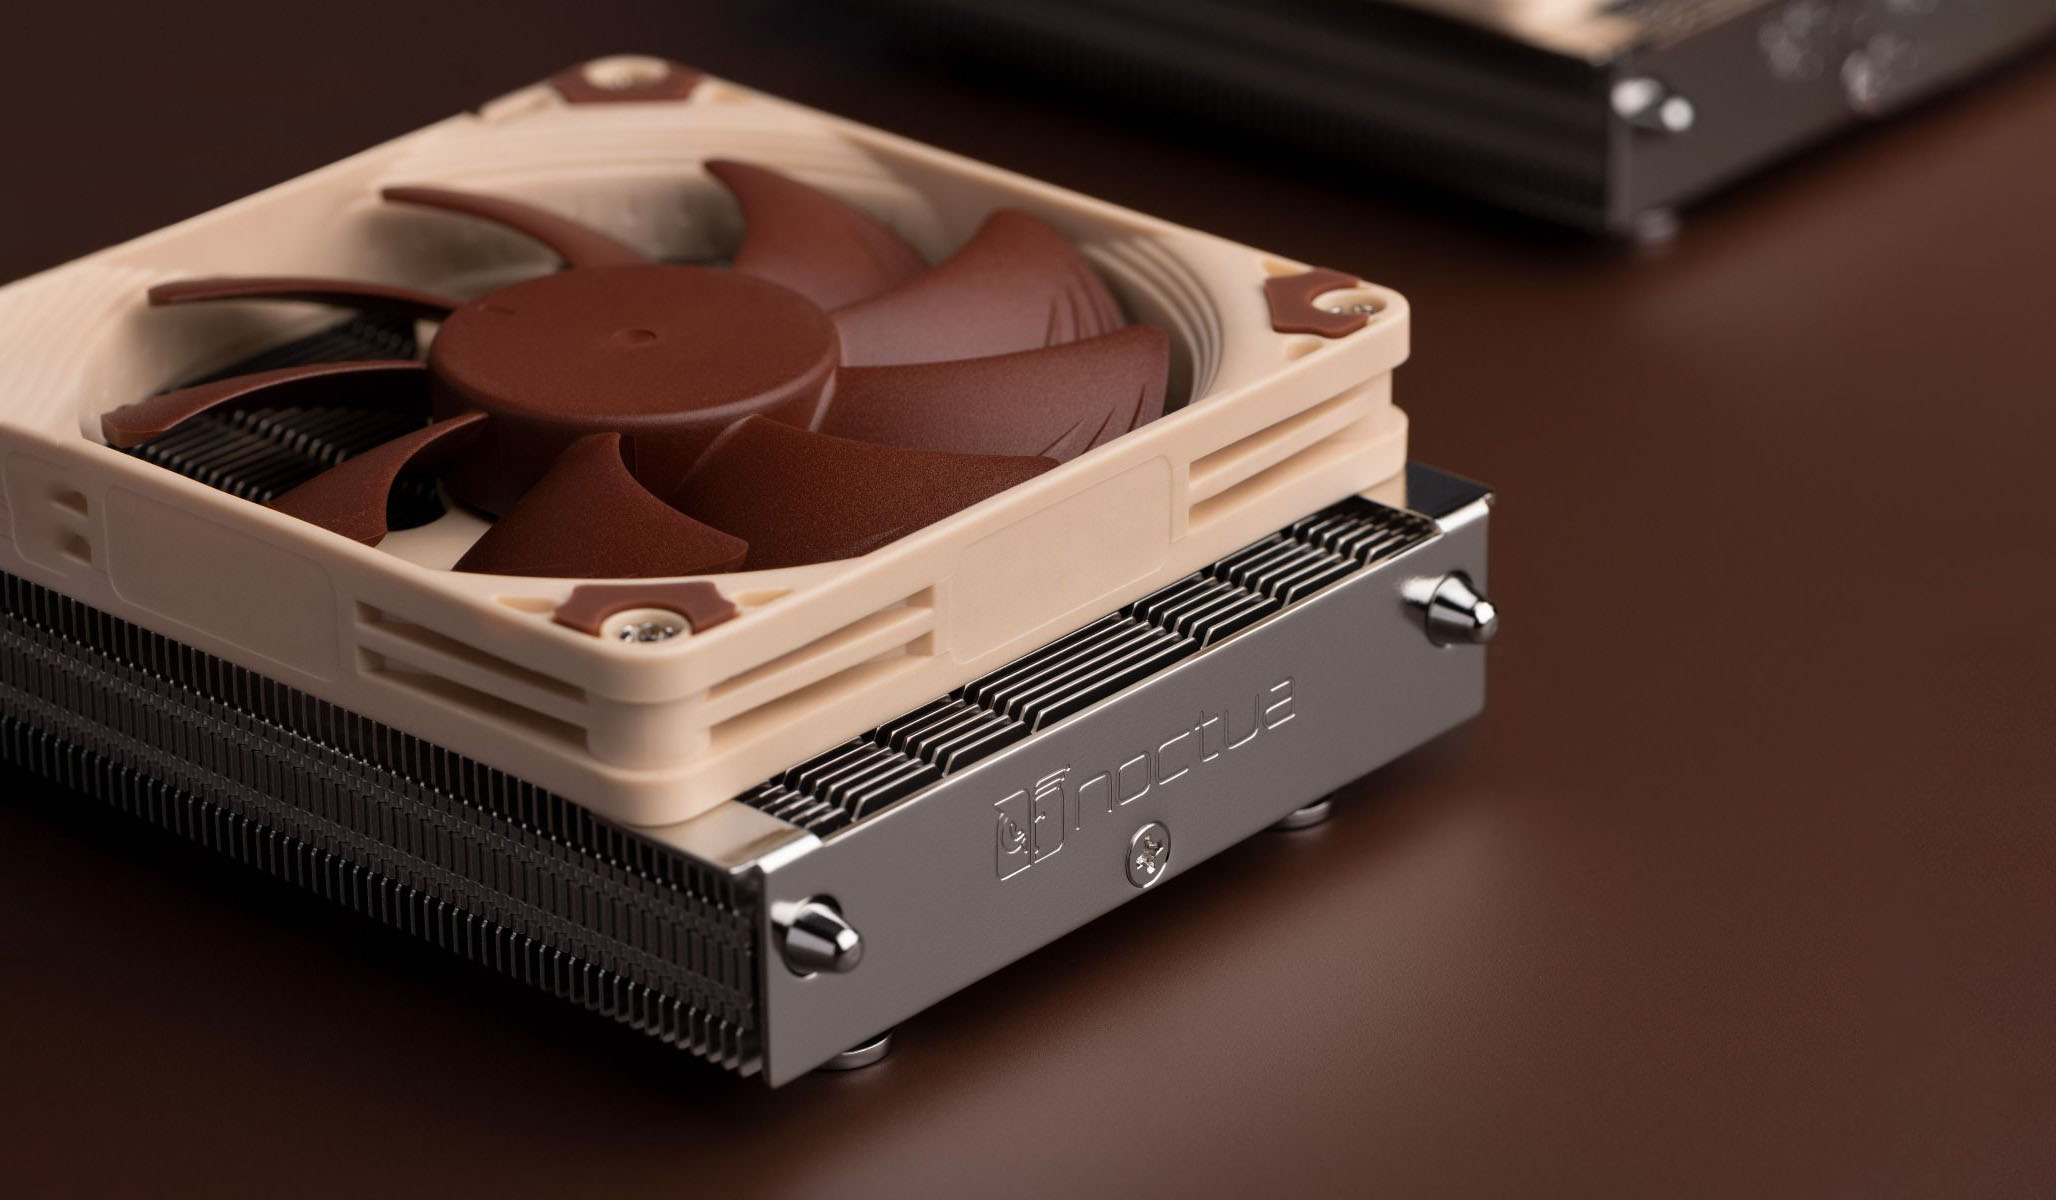 Noctua launches low-profile CPU coolers for AMD 7000 CPUs VideoCardz.com